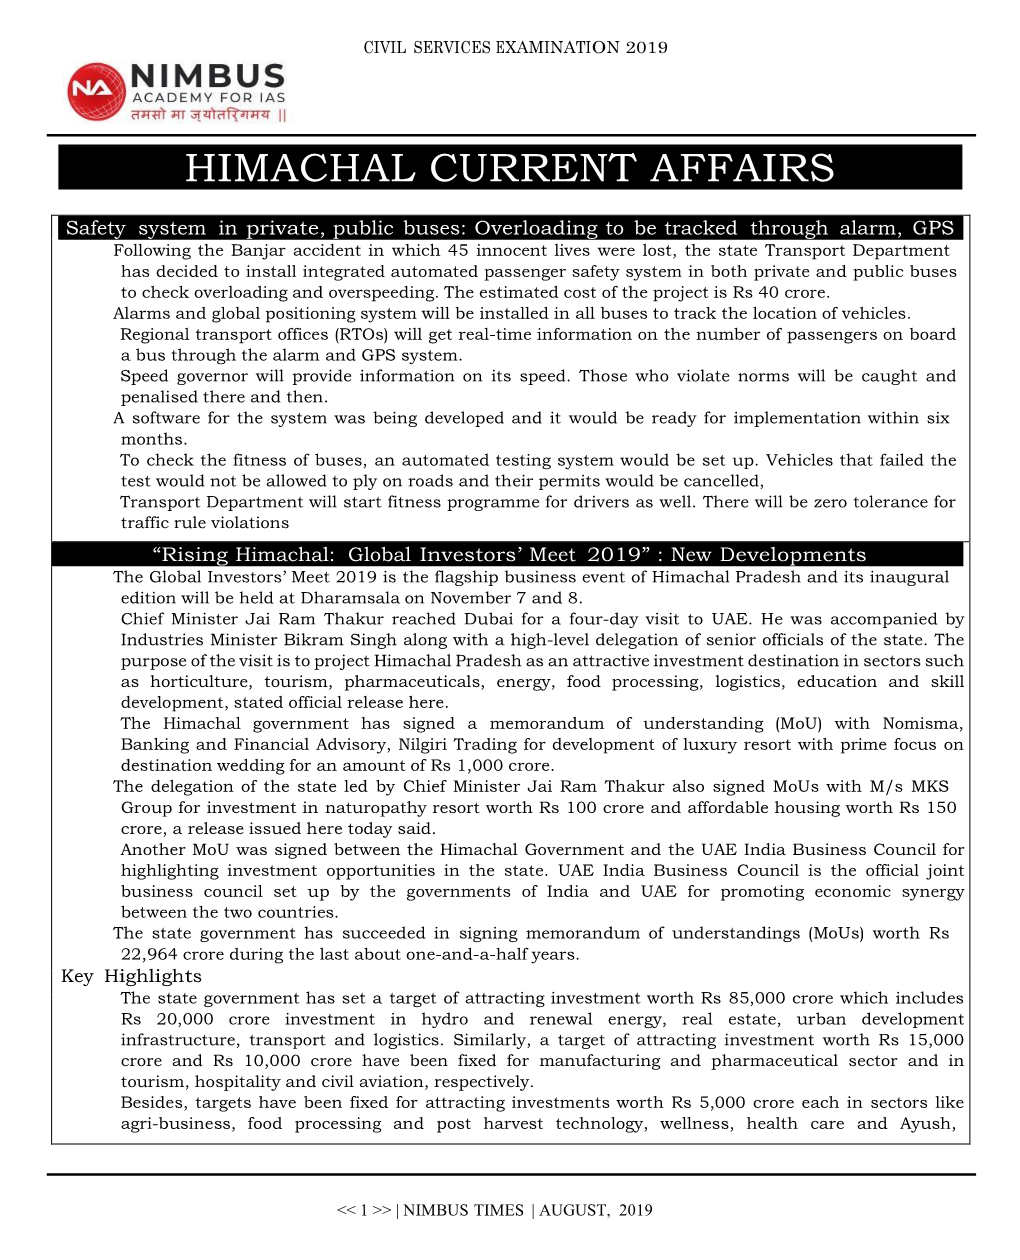 Himachal Current Affairs